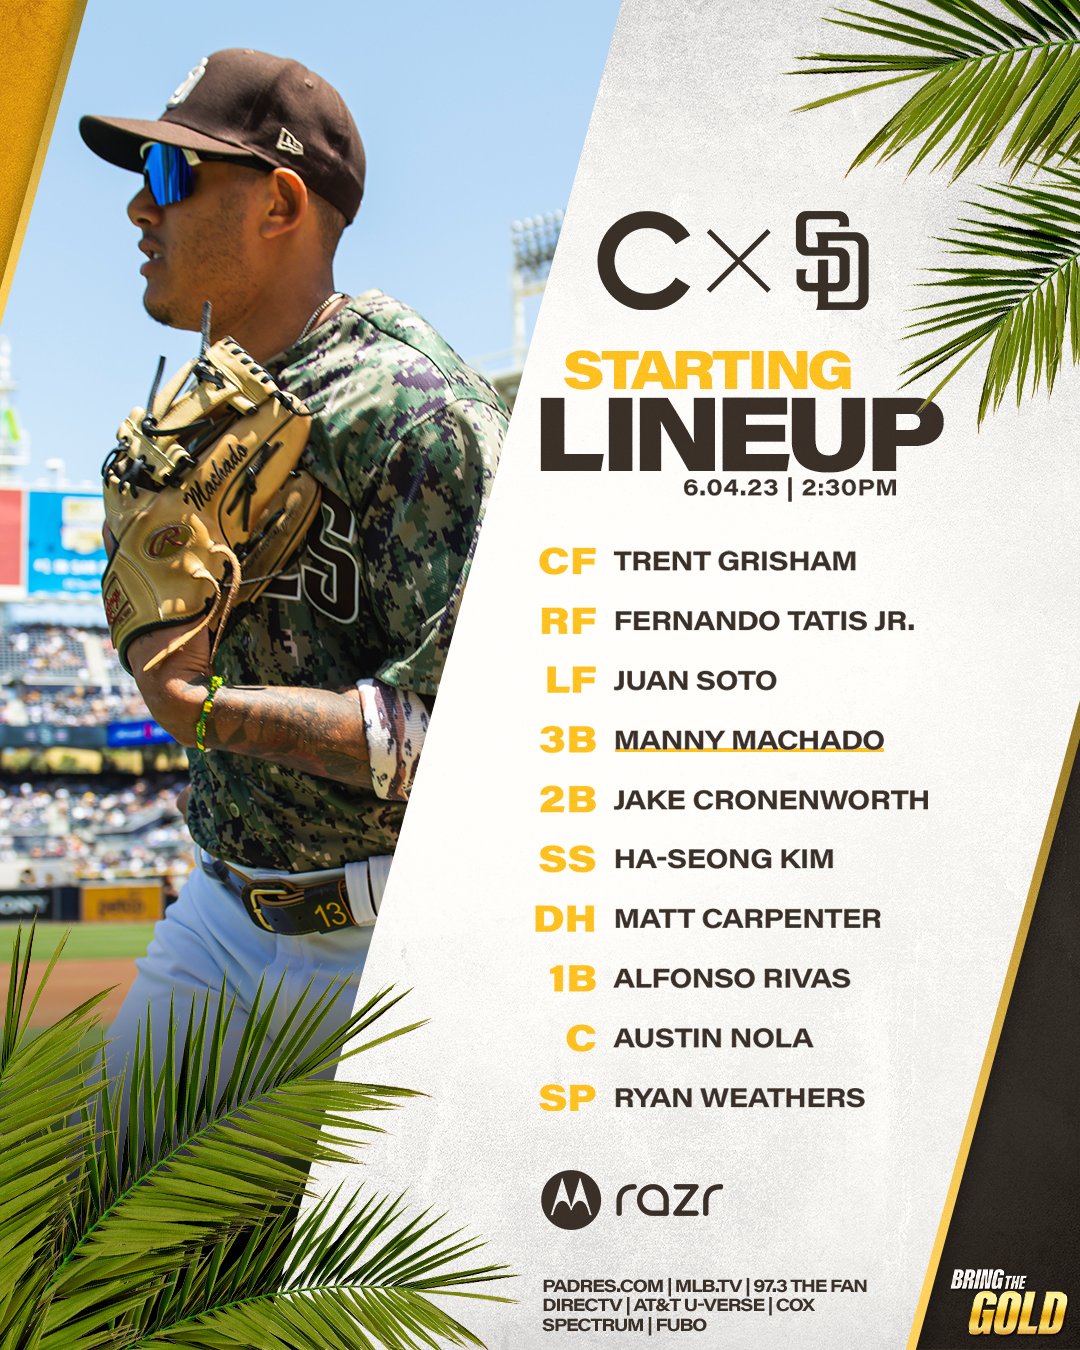 San Diego Padres on X: Sunday afternoon baseball! #BringTheGold